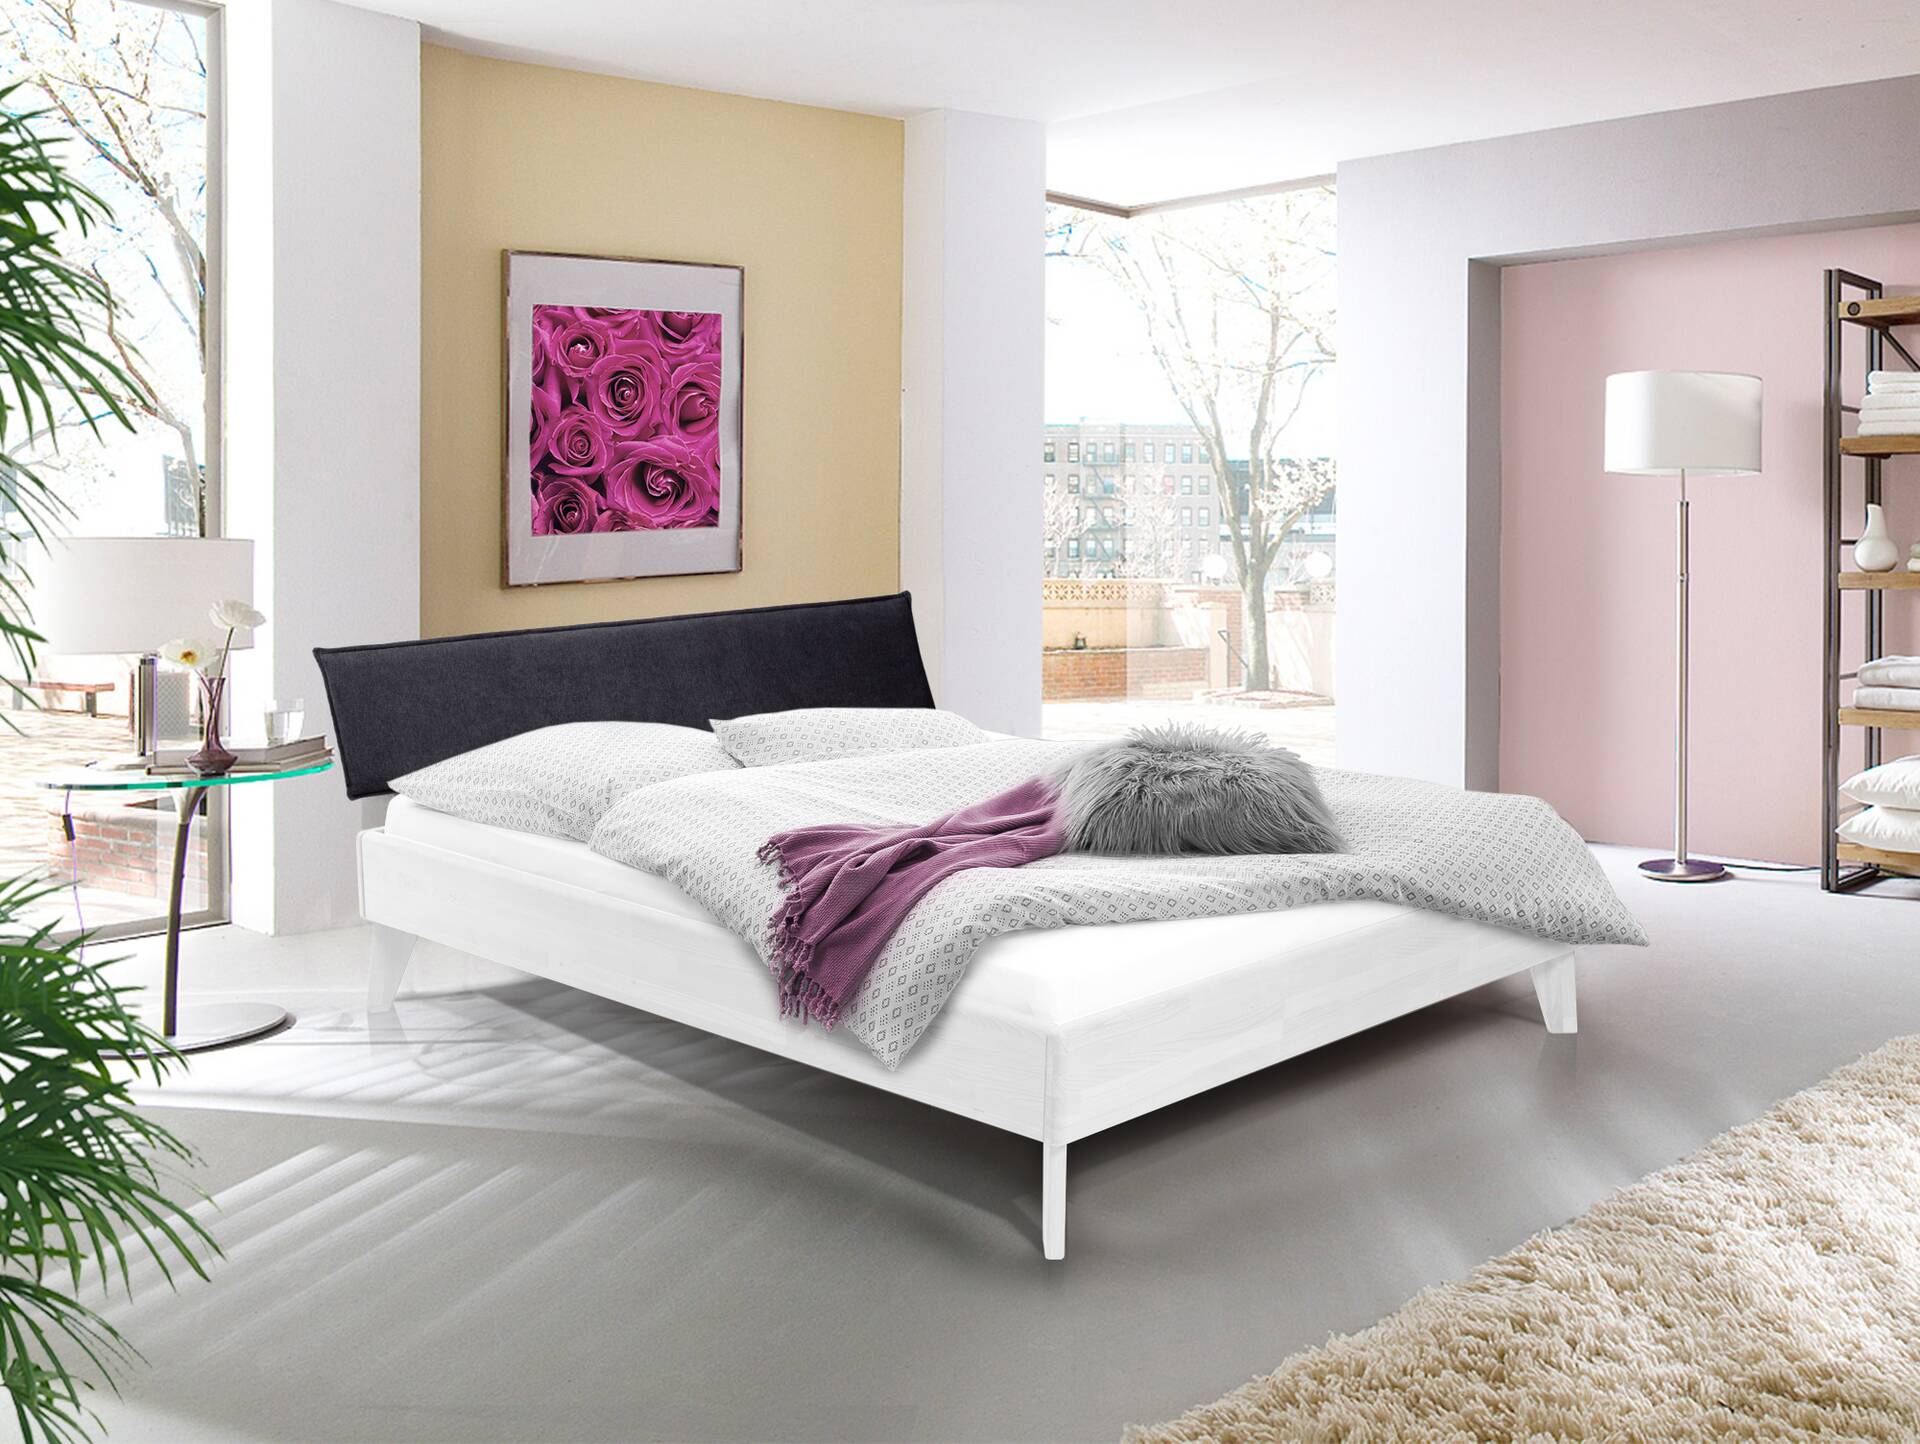 CALIDO 4-Fuß-Bett mit Polster-Kopfteil, Material Massivholz 180 x 220 cm | Buche weiss lackiert | Stoff Anthrazit | Standardhöhe